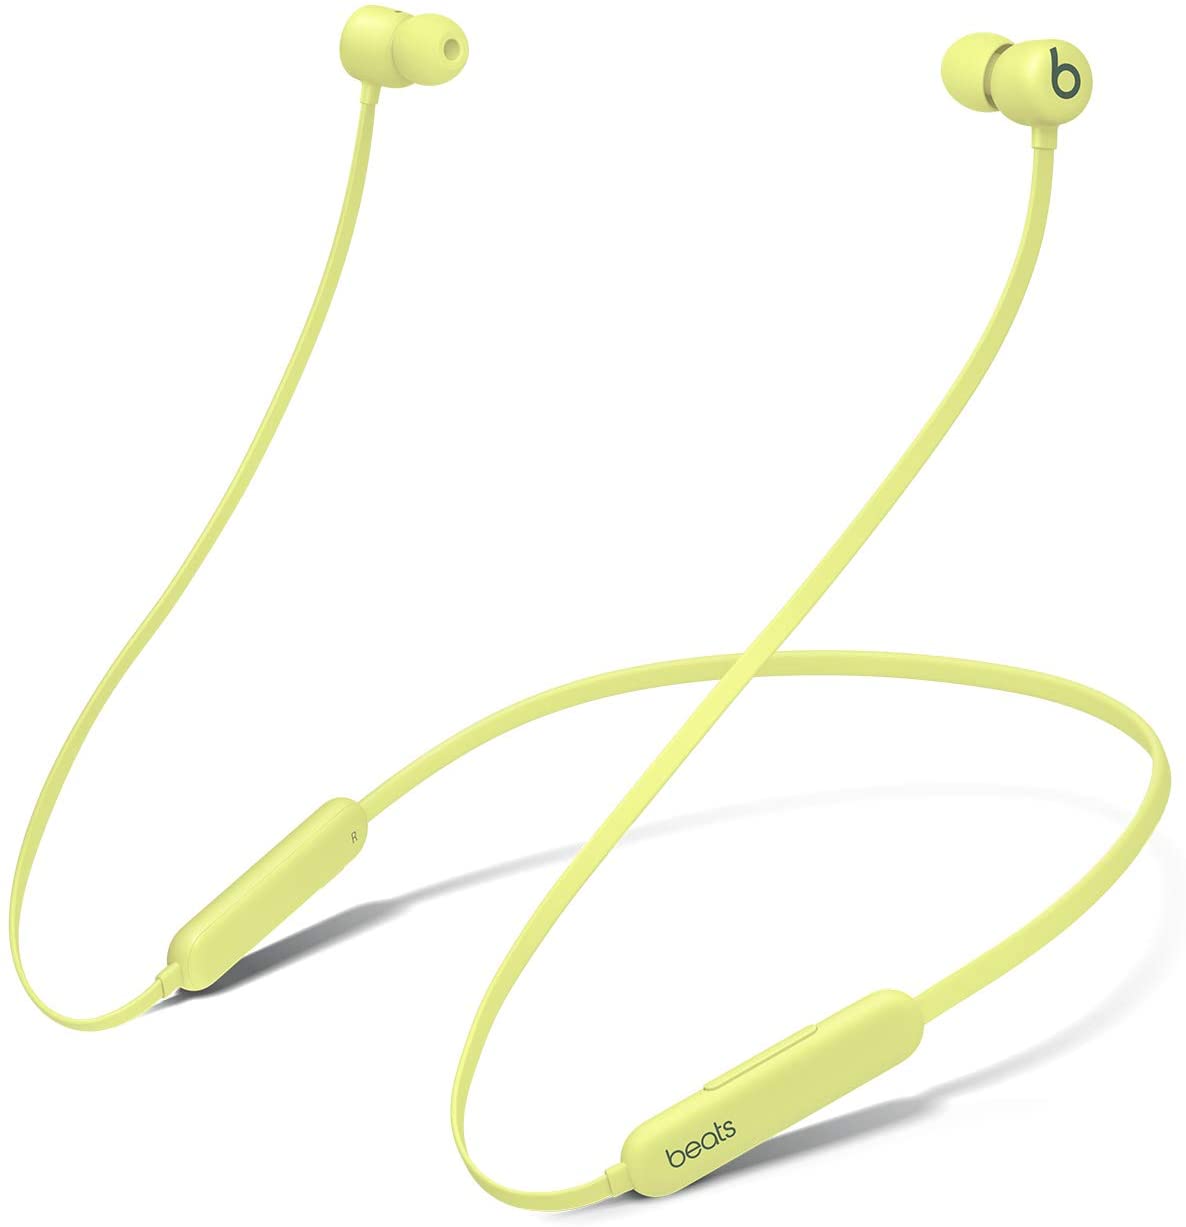 Beats Flex Wireless Portable Bluetooth Earbuds Built-in Microphone - Yuzu Yellow (Certified Refurbished)